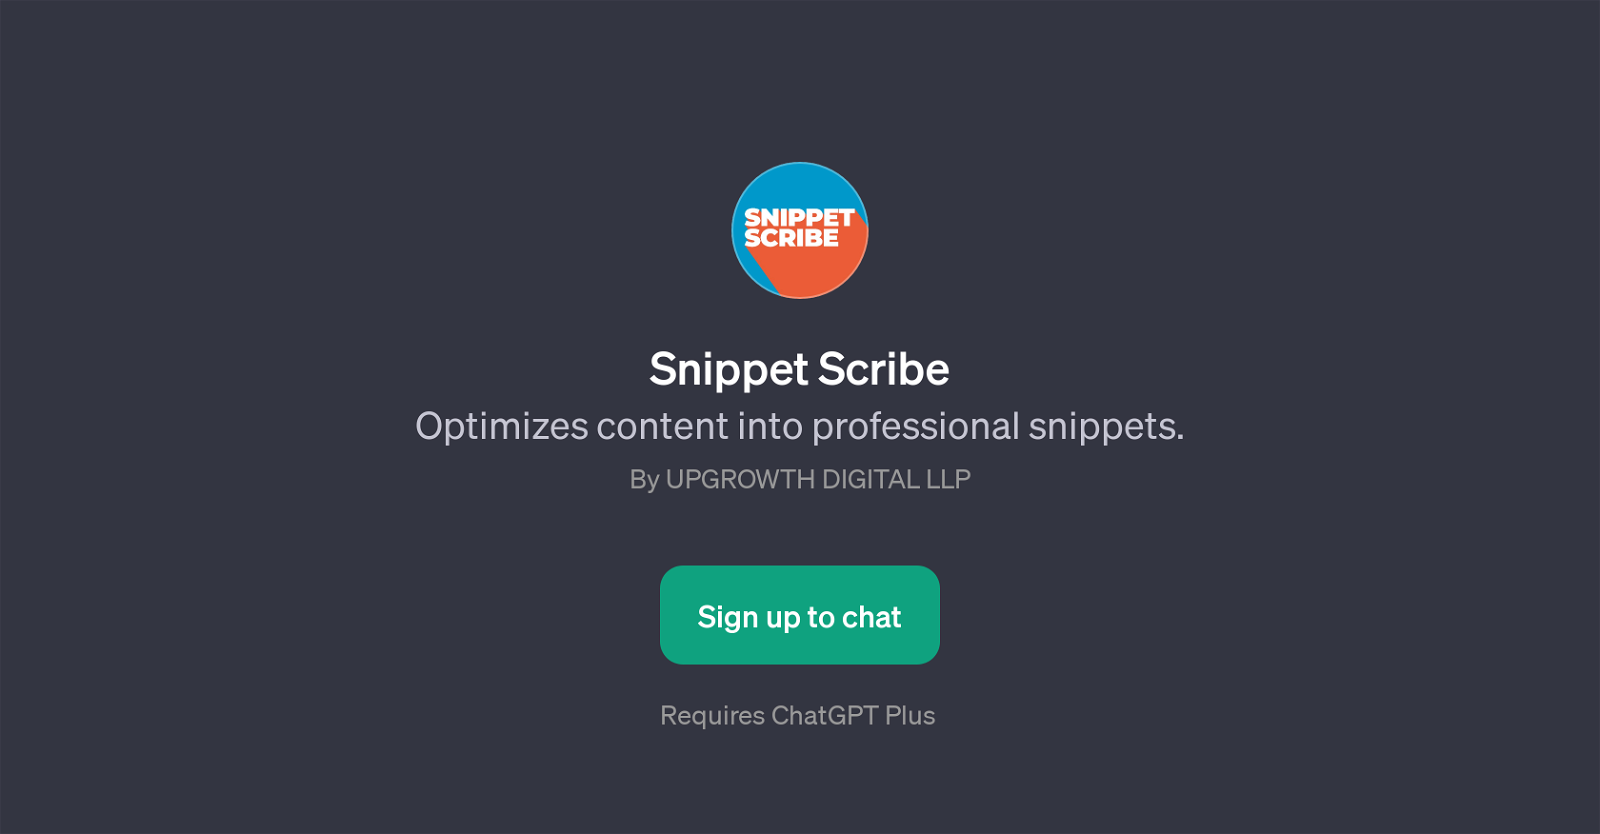 Snippet Scribe website